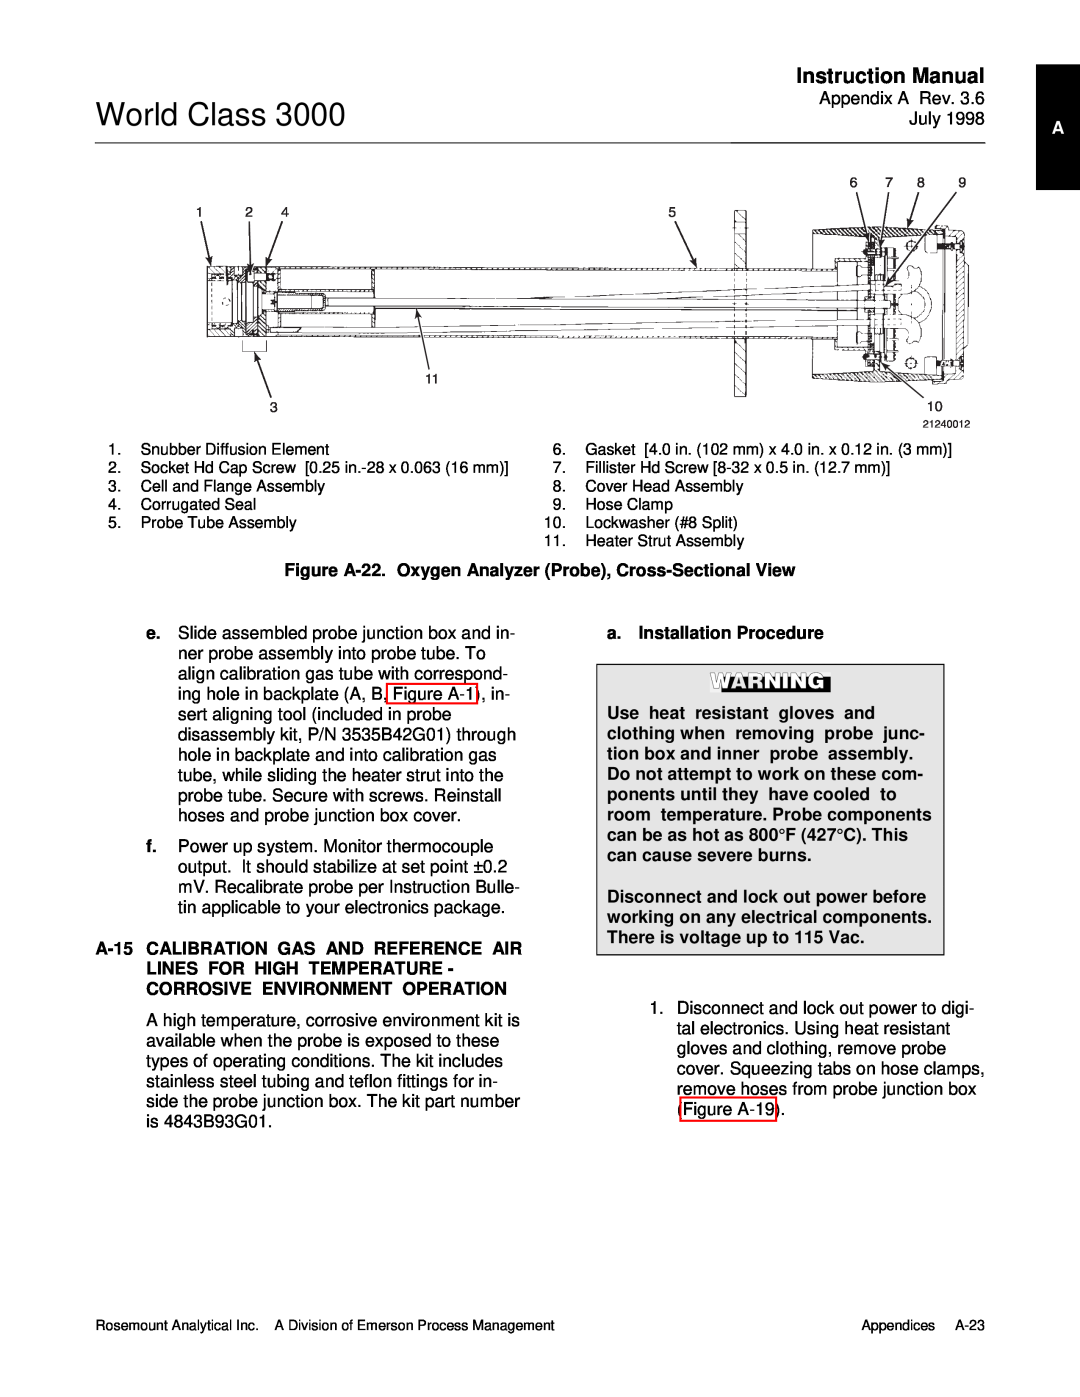 Emerson 3000 manual World Class, a. Installation Procedure 